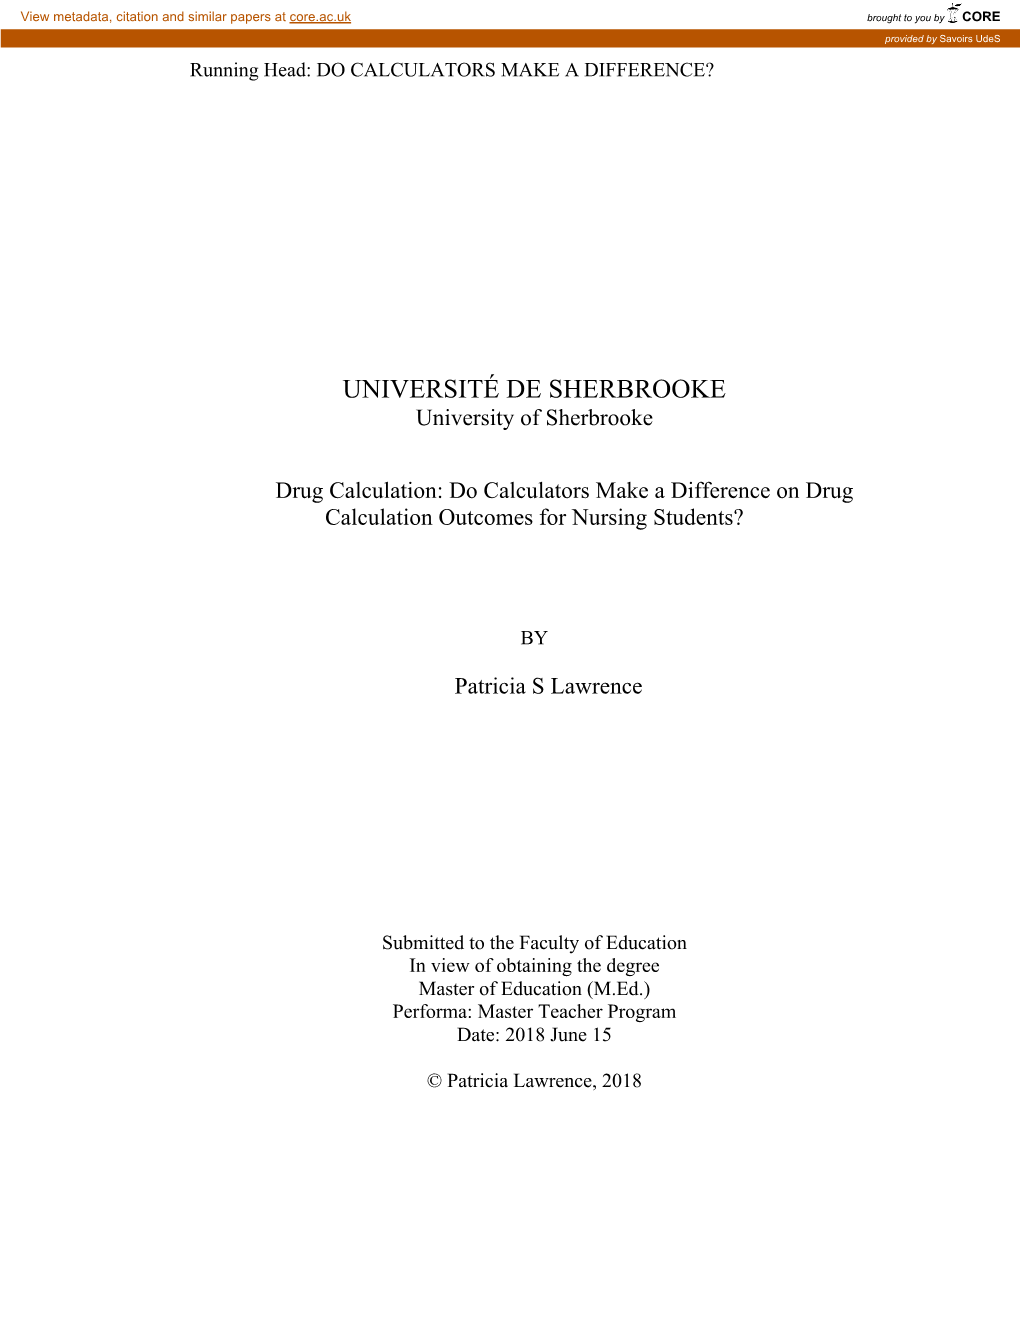 UNIVERSITÉ DE SHERBROOKE University of Sherbrooke